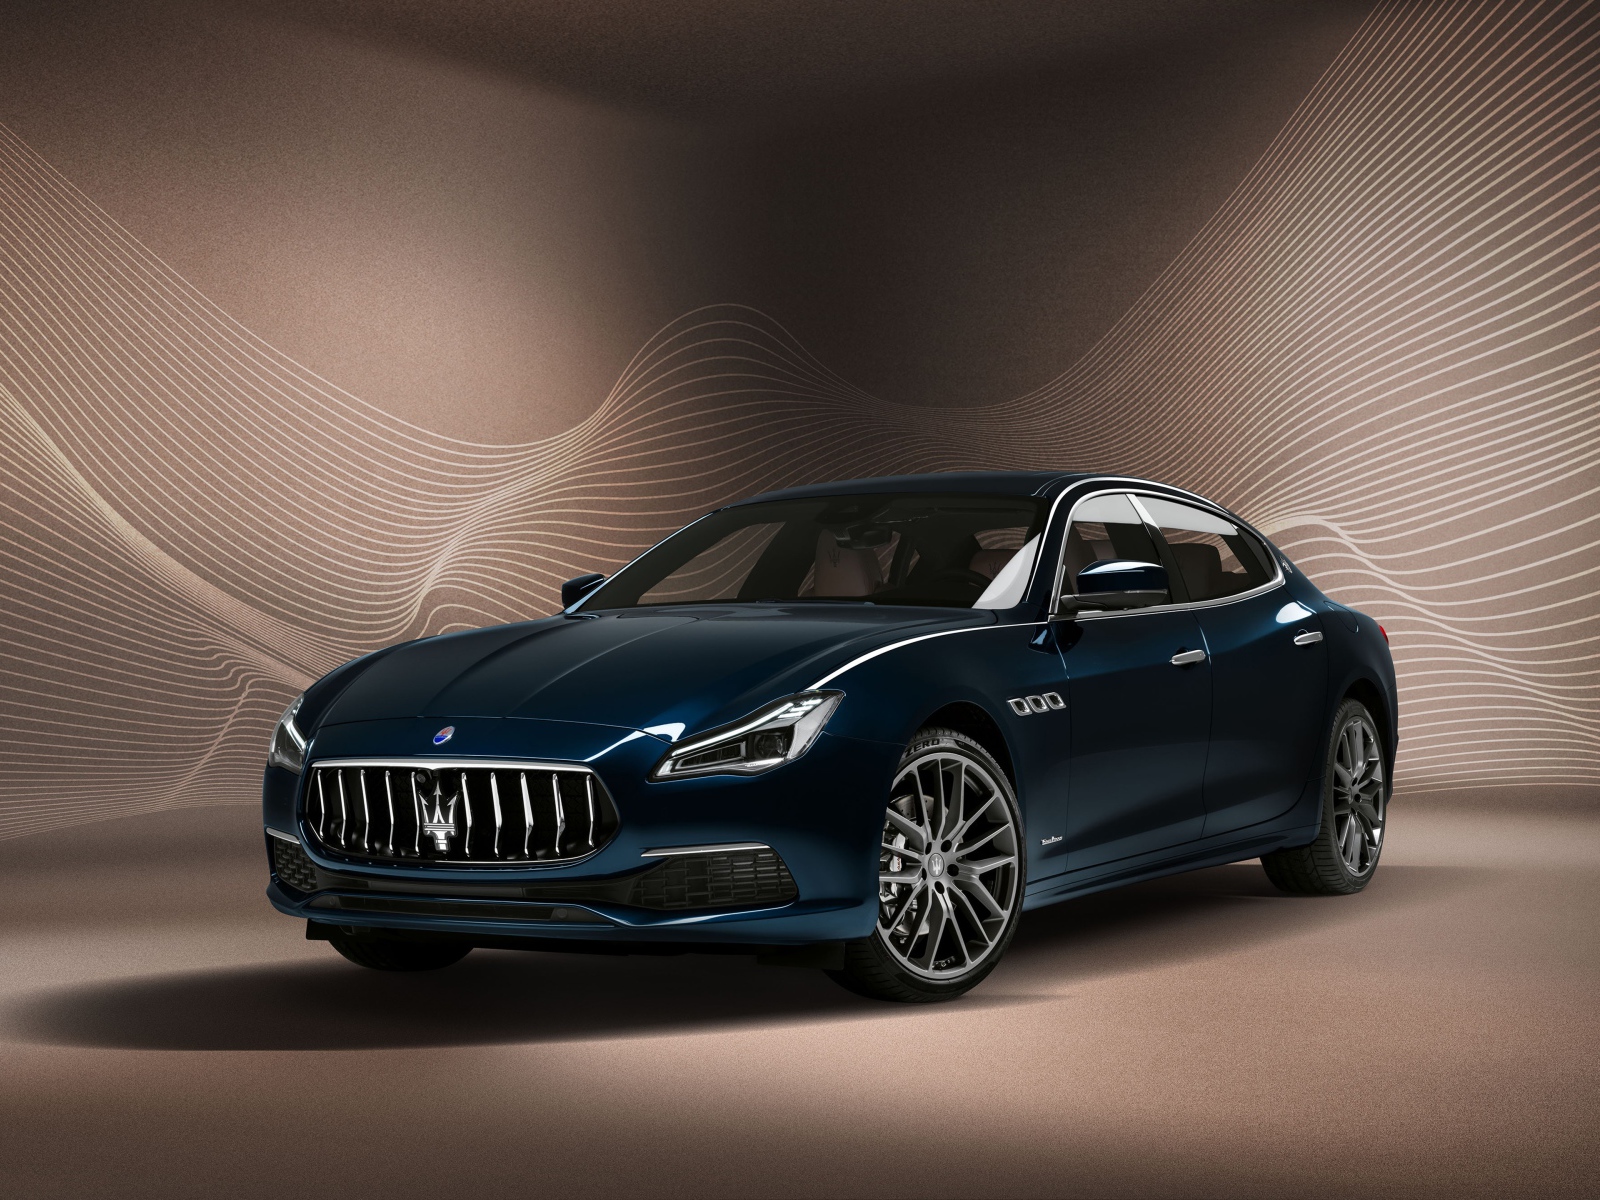 Автомобиль мазерати. Мазерати Кватропорте 2020. Мазерати Кватропорте 2023. Maserati Quattroporte Sport gt 2020. Maserati Ghibli 2020.